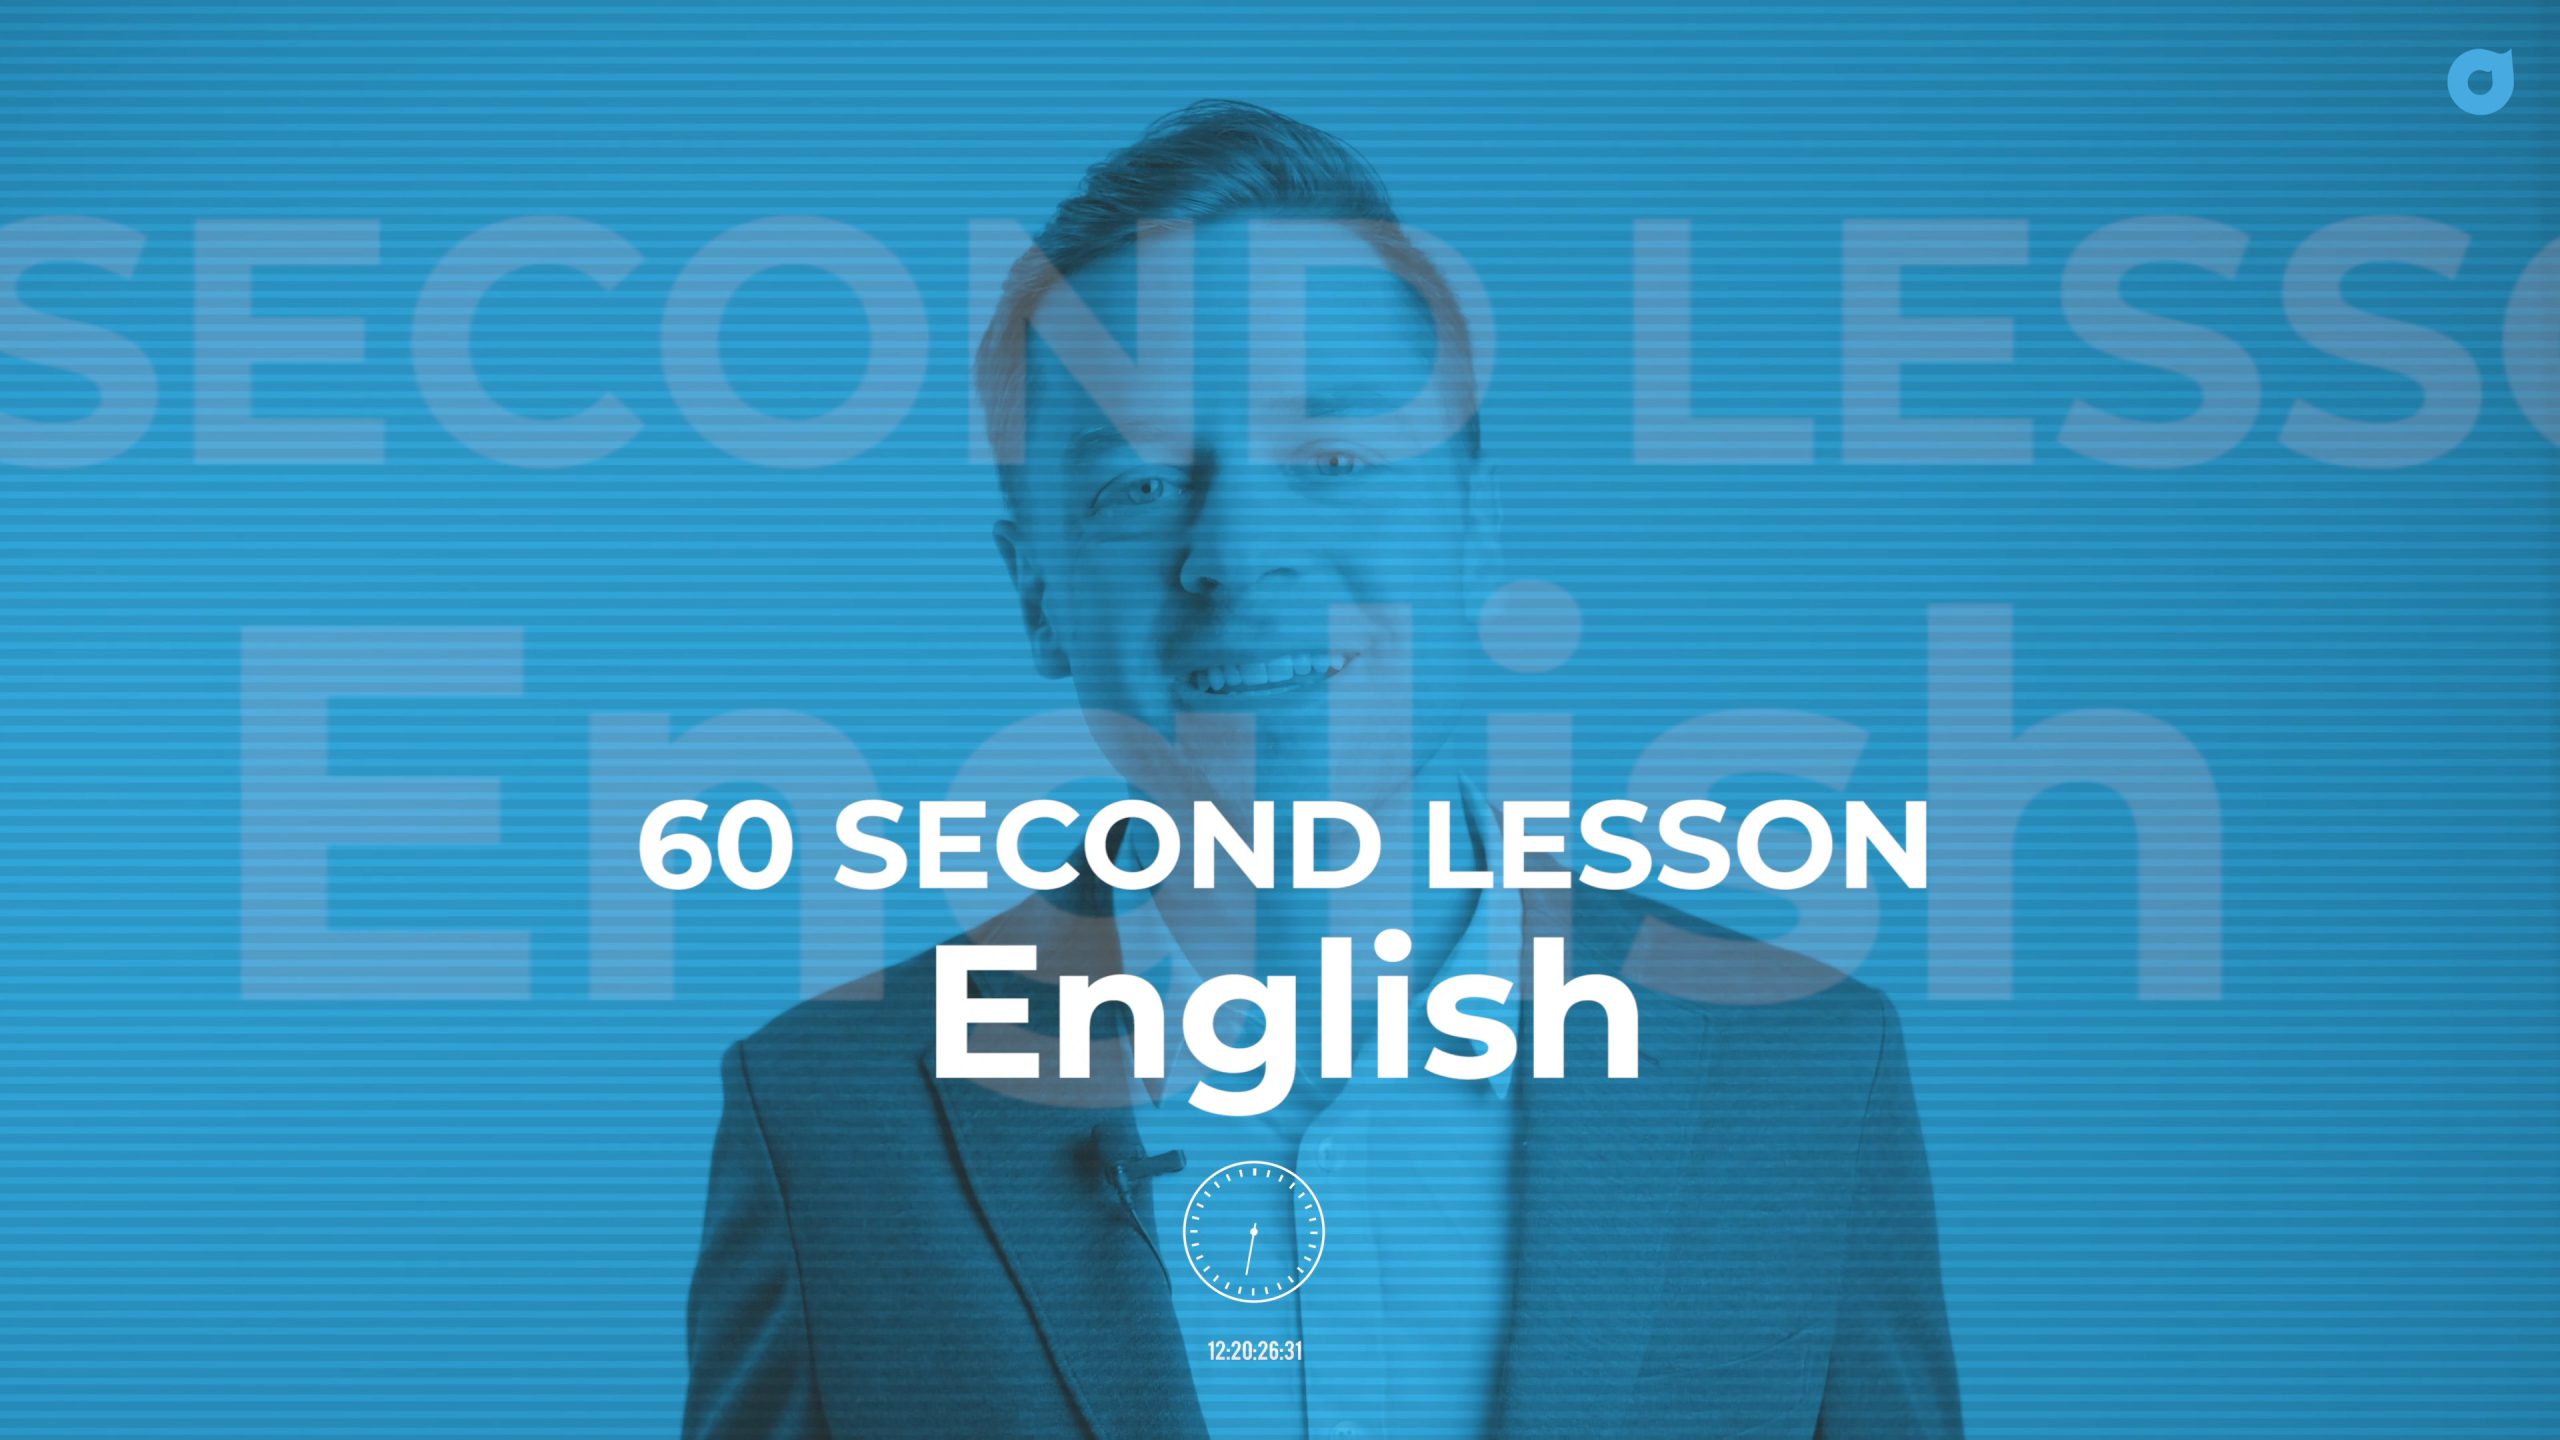 ️ 60 Second English Lesson: Holidays